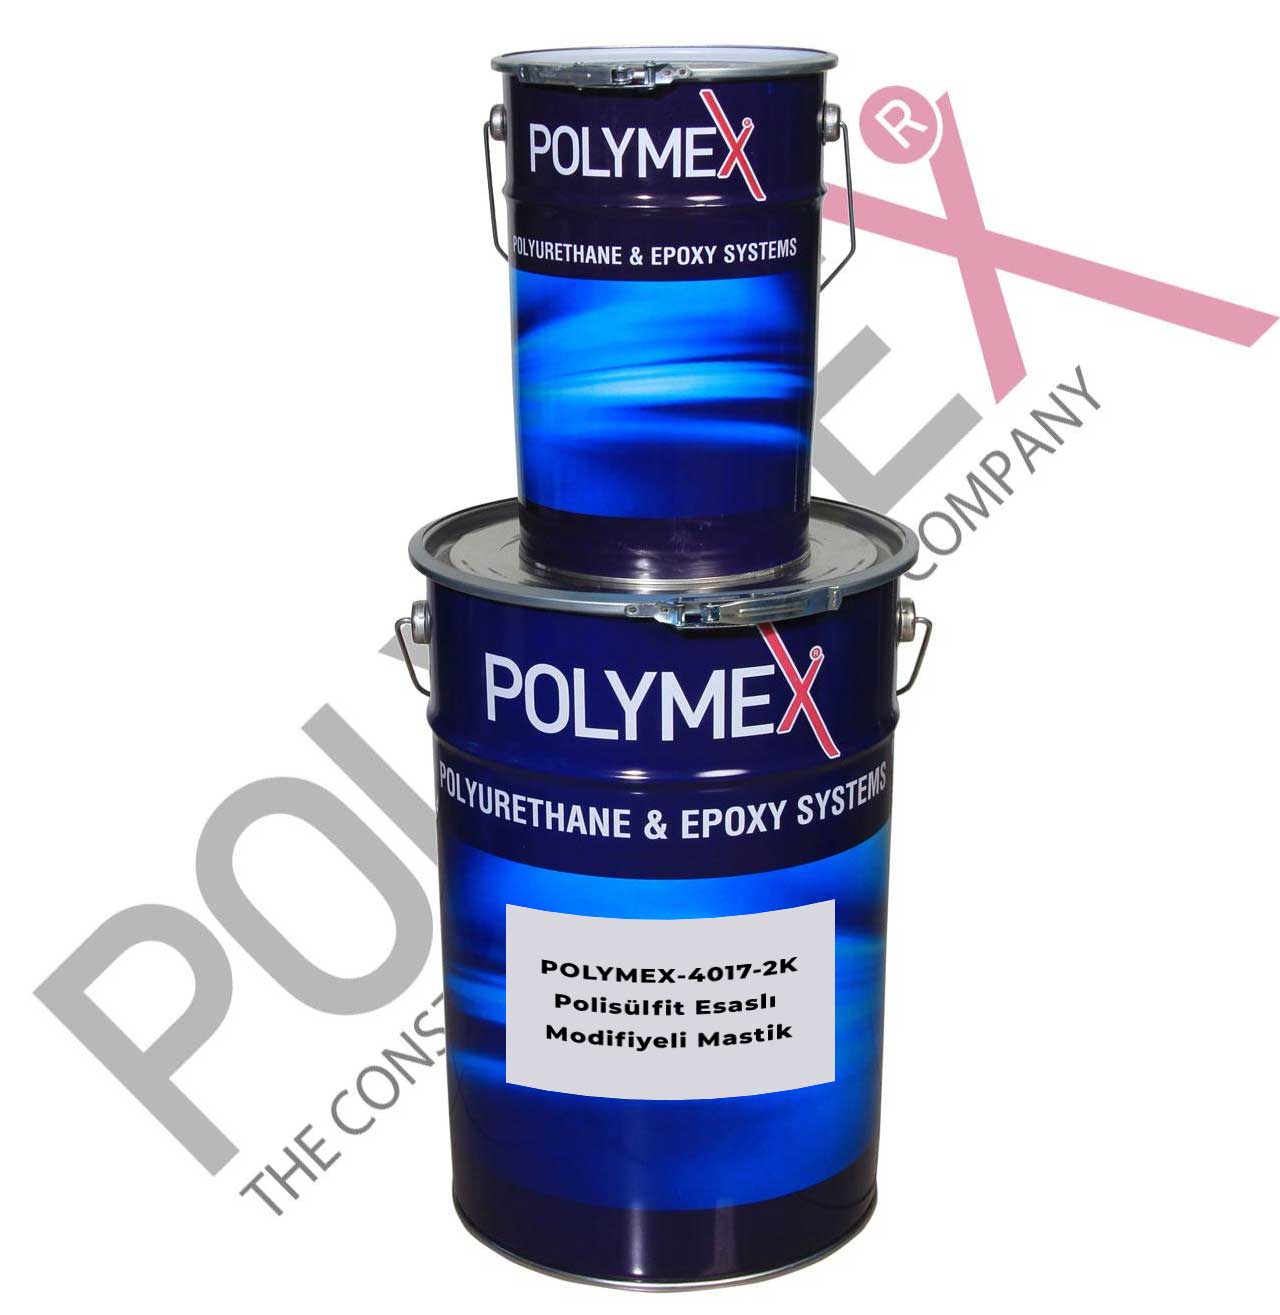 POLYMEX-4017-2K Polisülfit Esaslı Modifiyeli Mastik